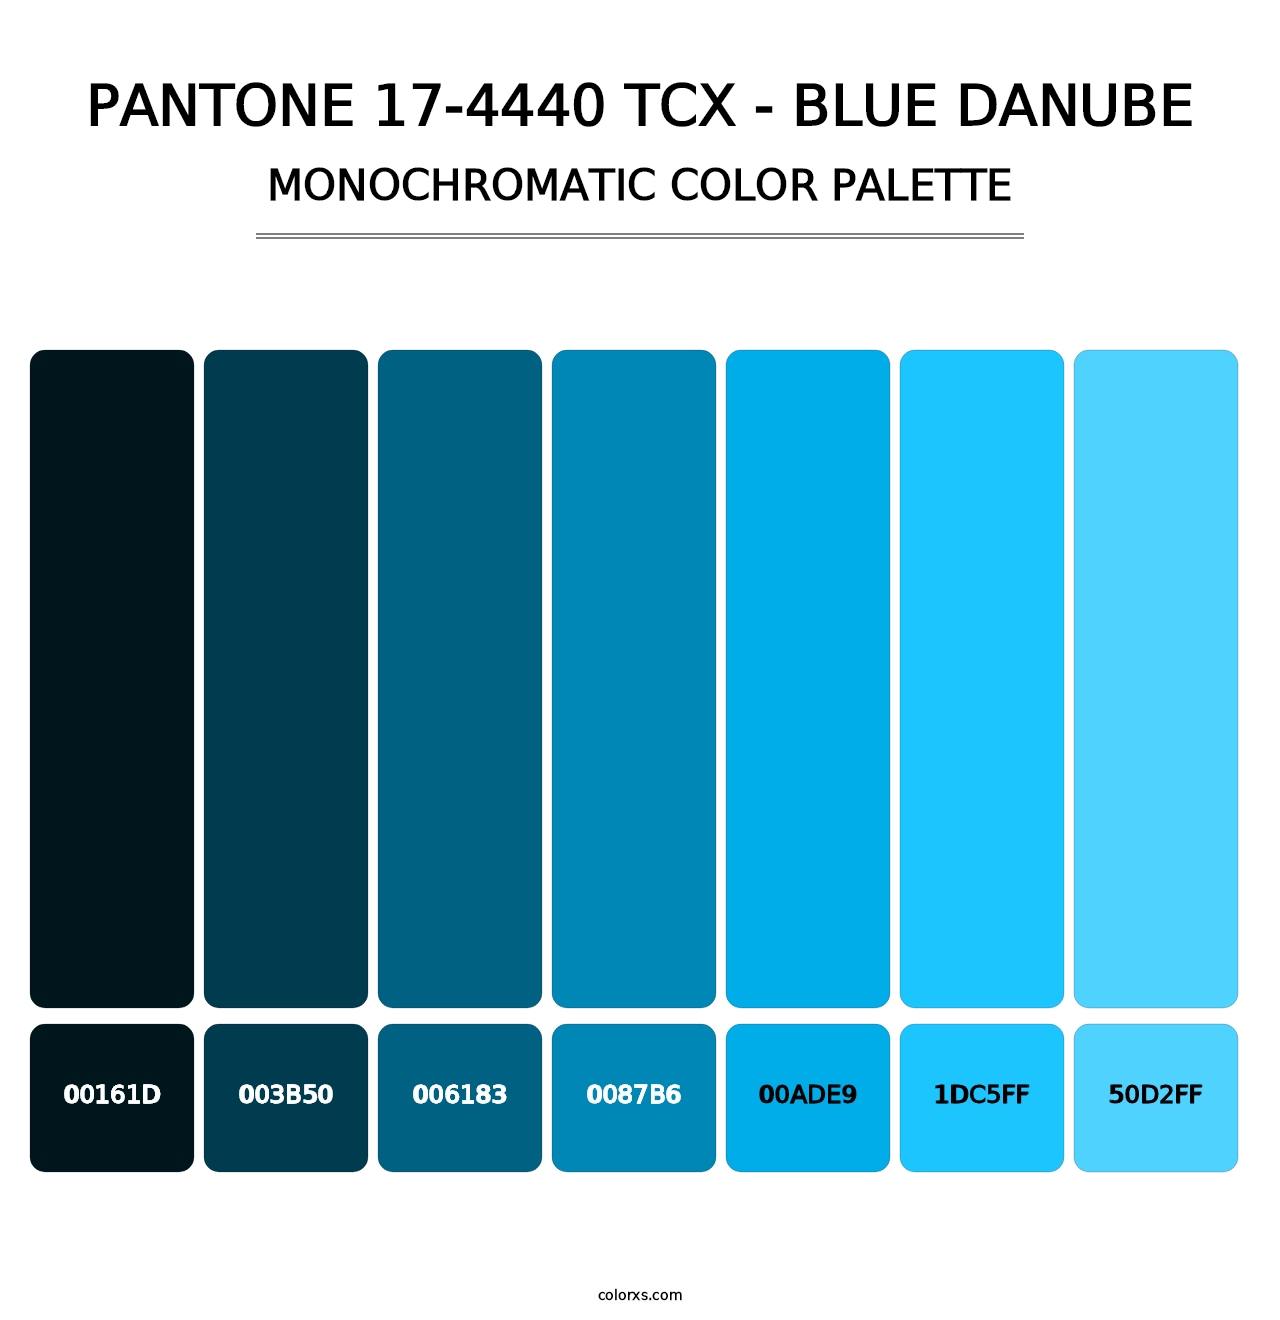 PANTONE 17-4440 TCX - Blue Danube - Monochromatic Color Palette